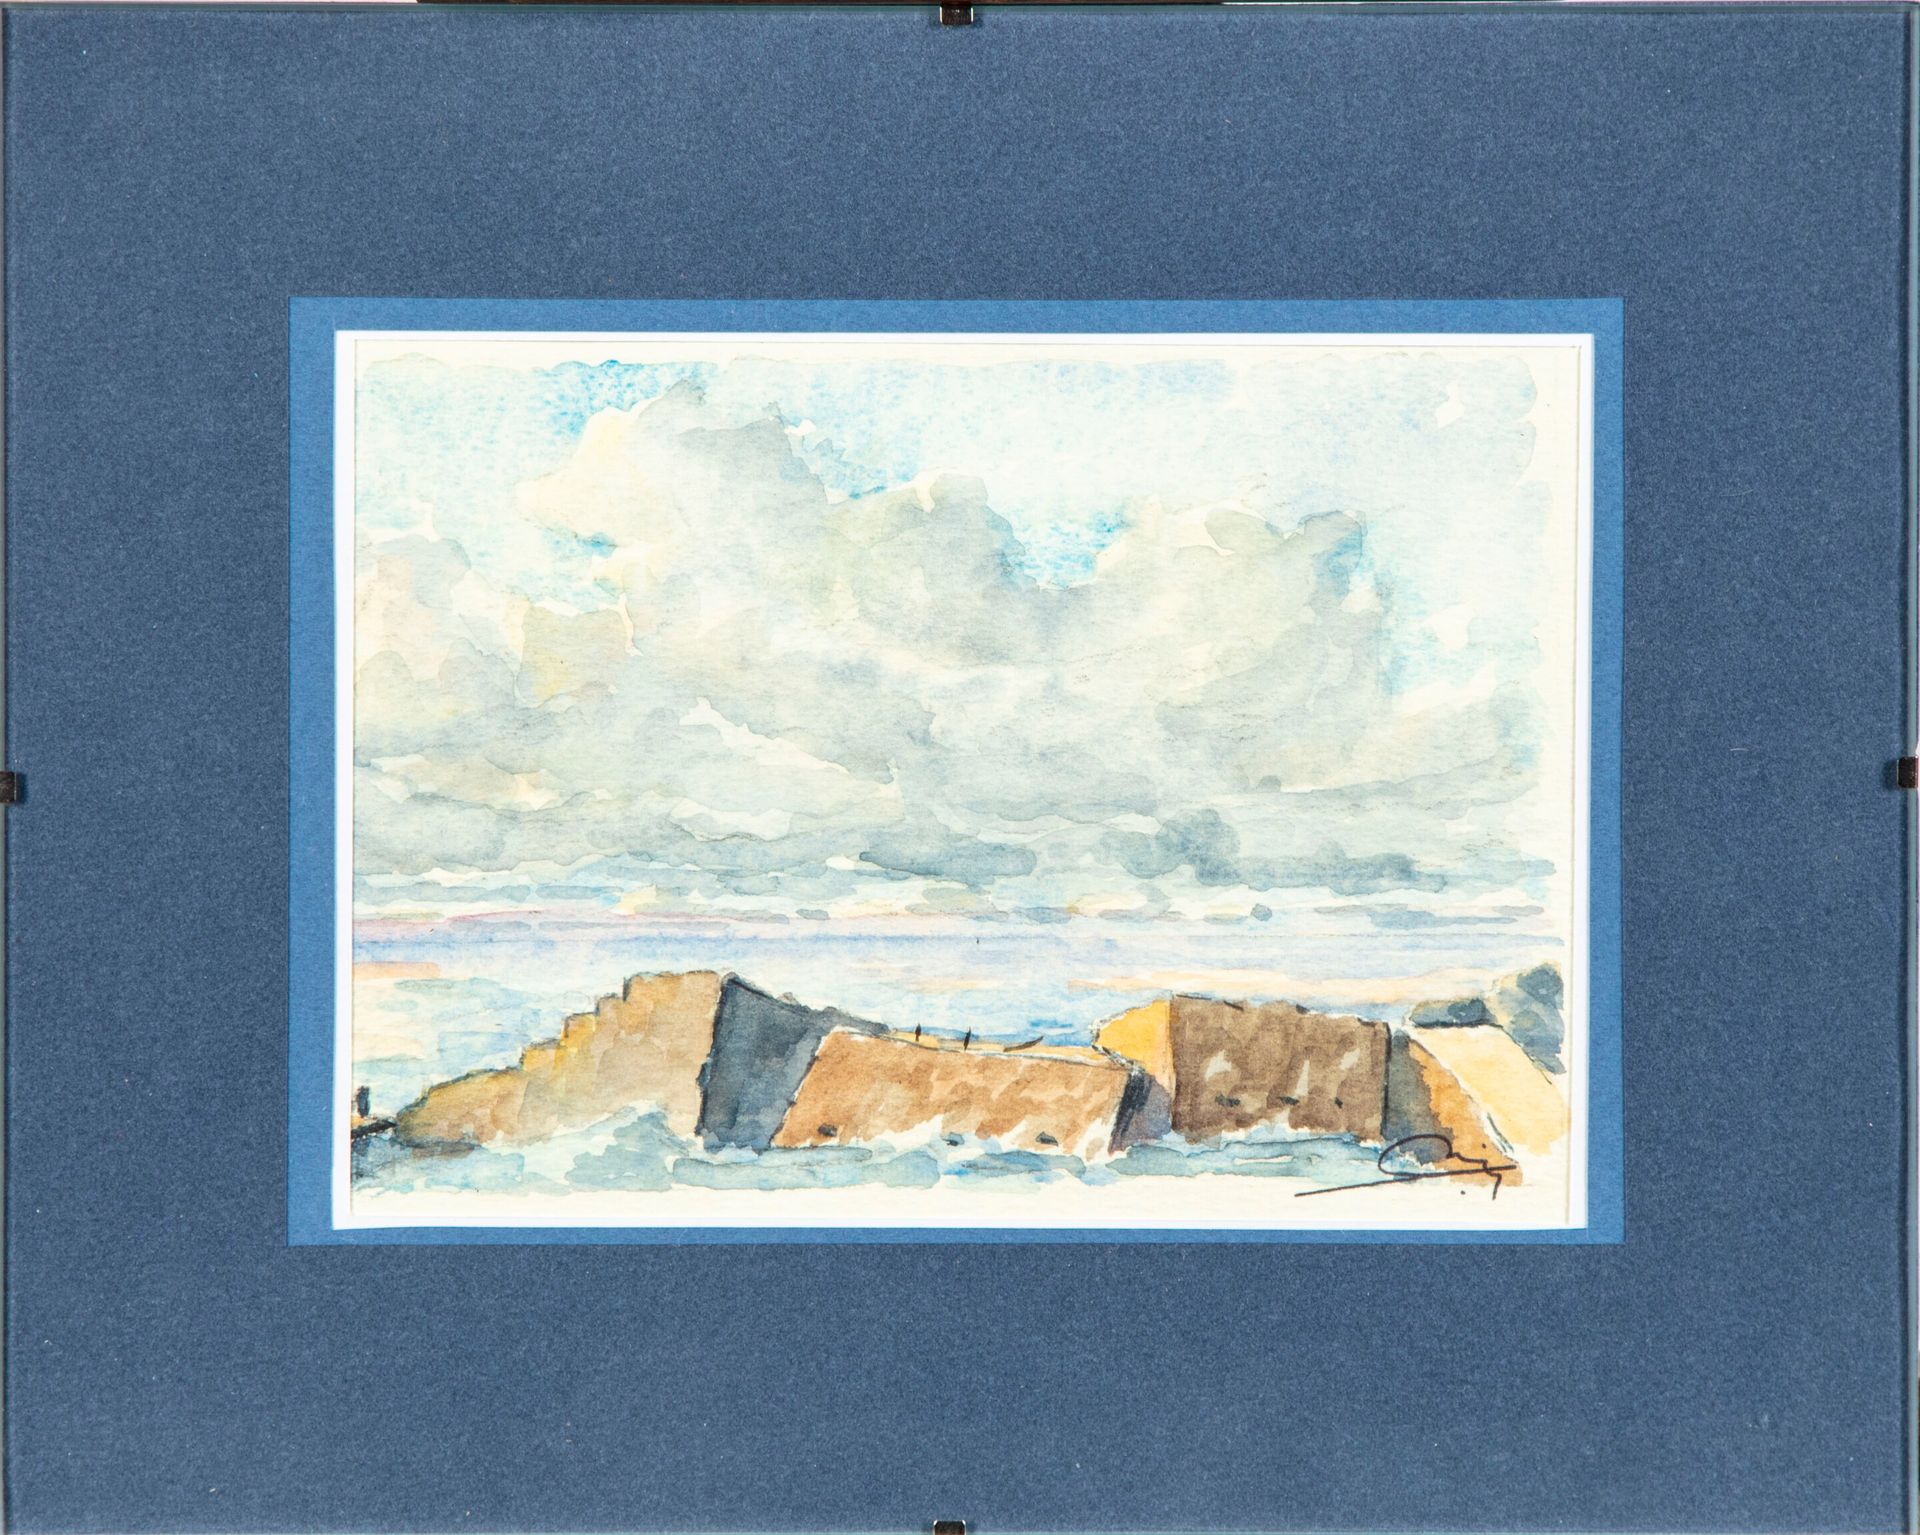 Null 现代学校

海边

水彩画，右下角有签名

14 x 19 厘米

对玻璃的意外